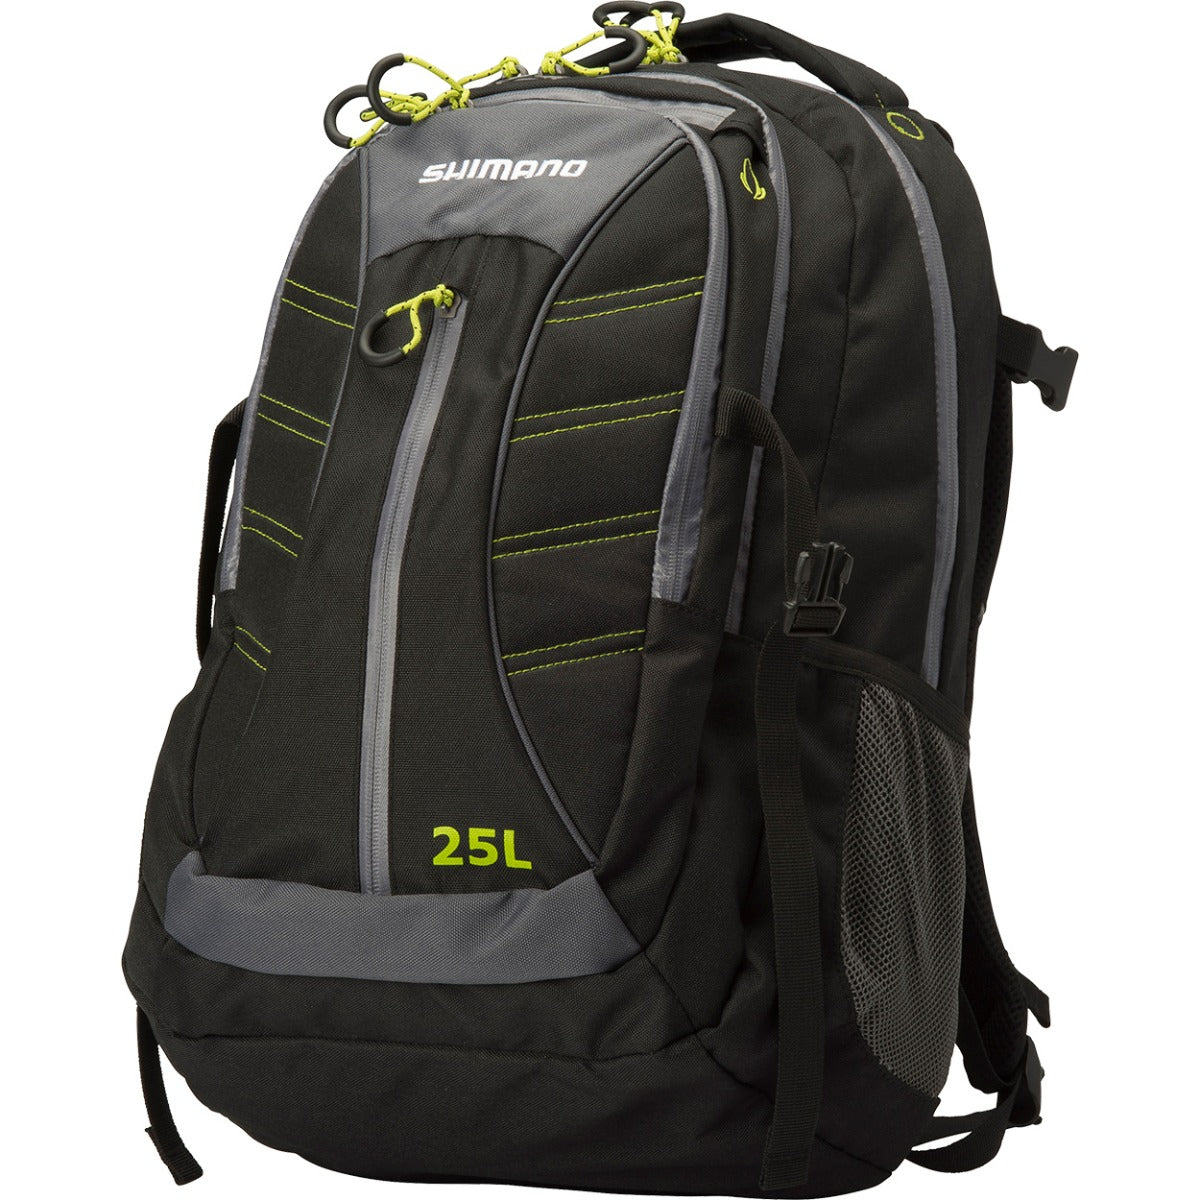 Shimano Tackle Storage Backpack 25L Mega Clearance